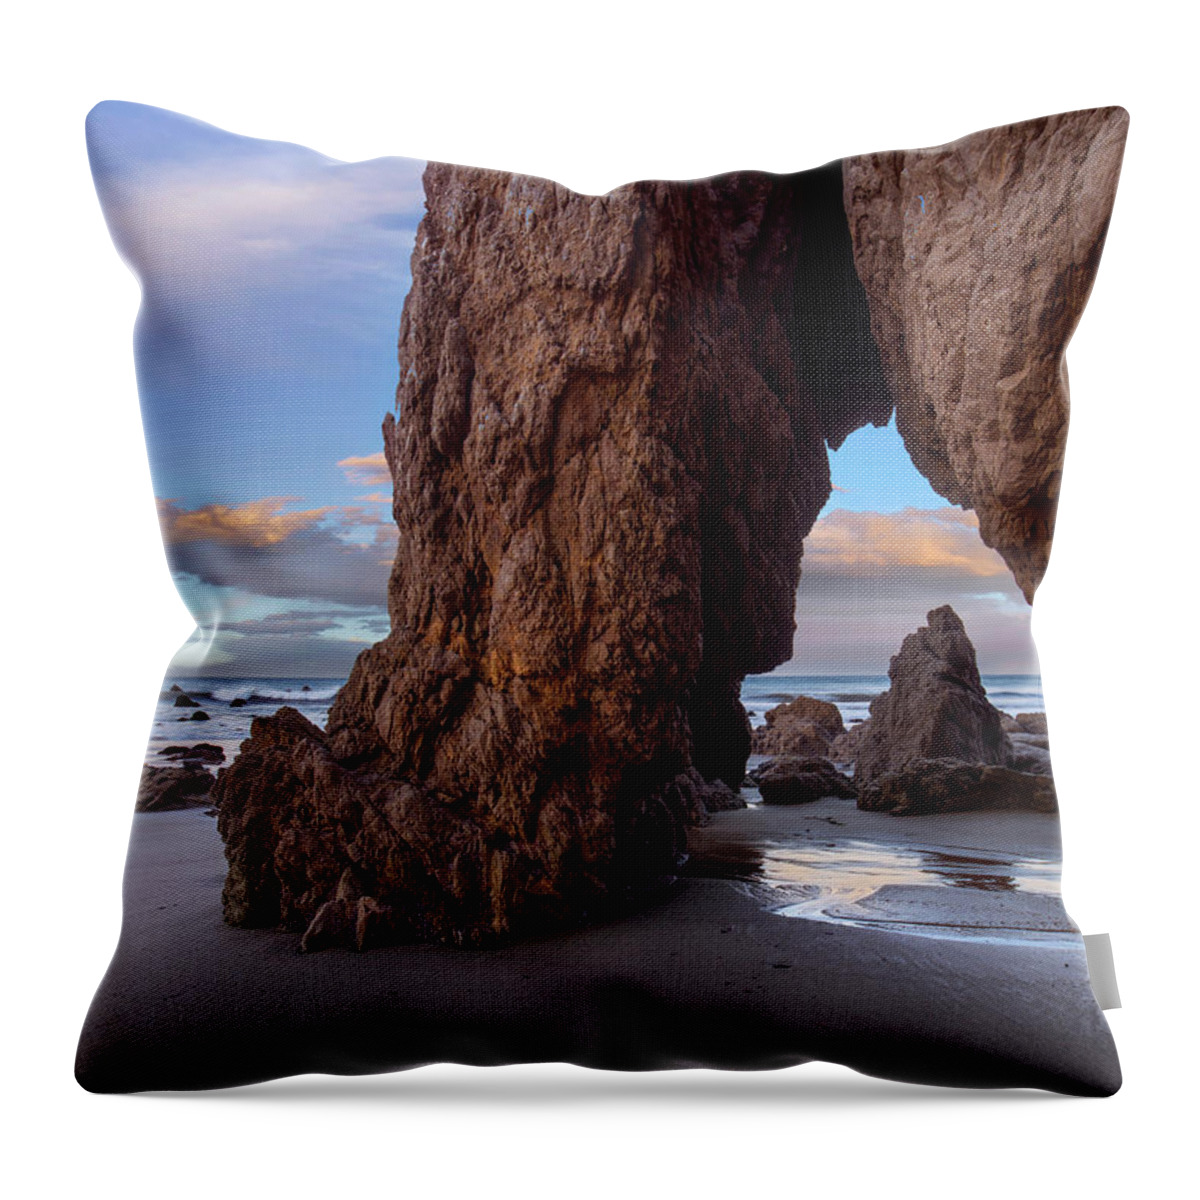 00568896 Throw Pillow featuring the photograph Sea Arch, El Matador State Beach, California by Tim Fitzharris